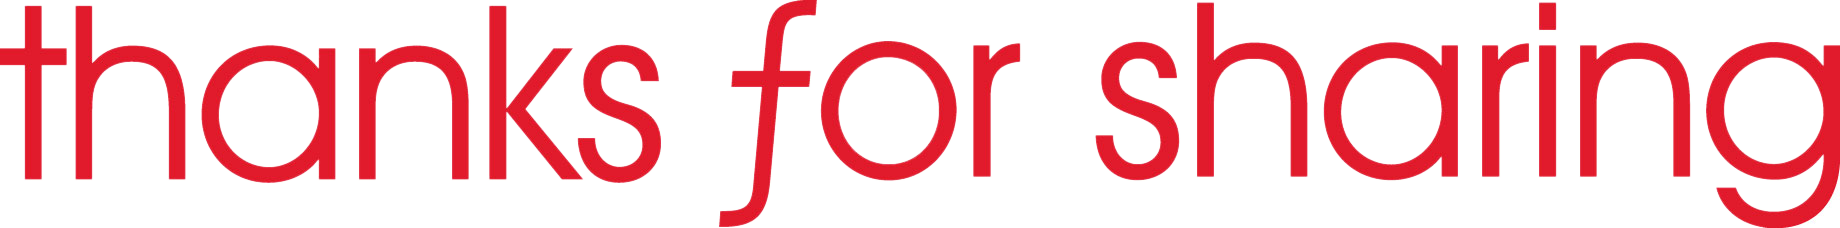 TFS Logo_Horizontal